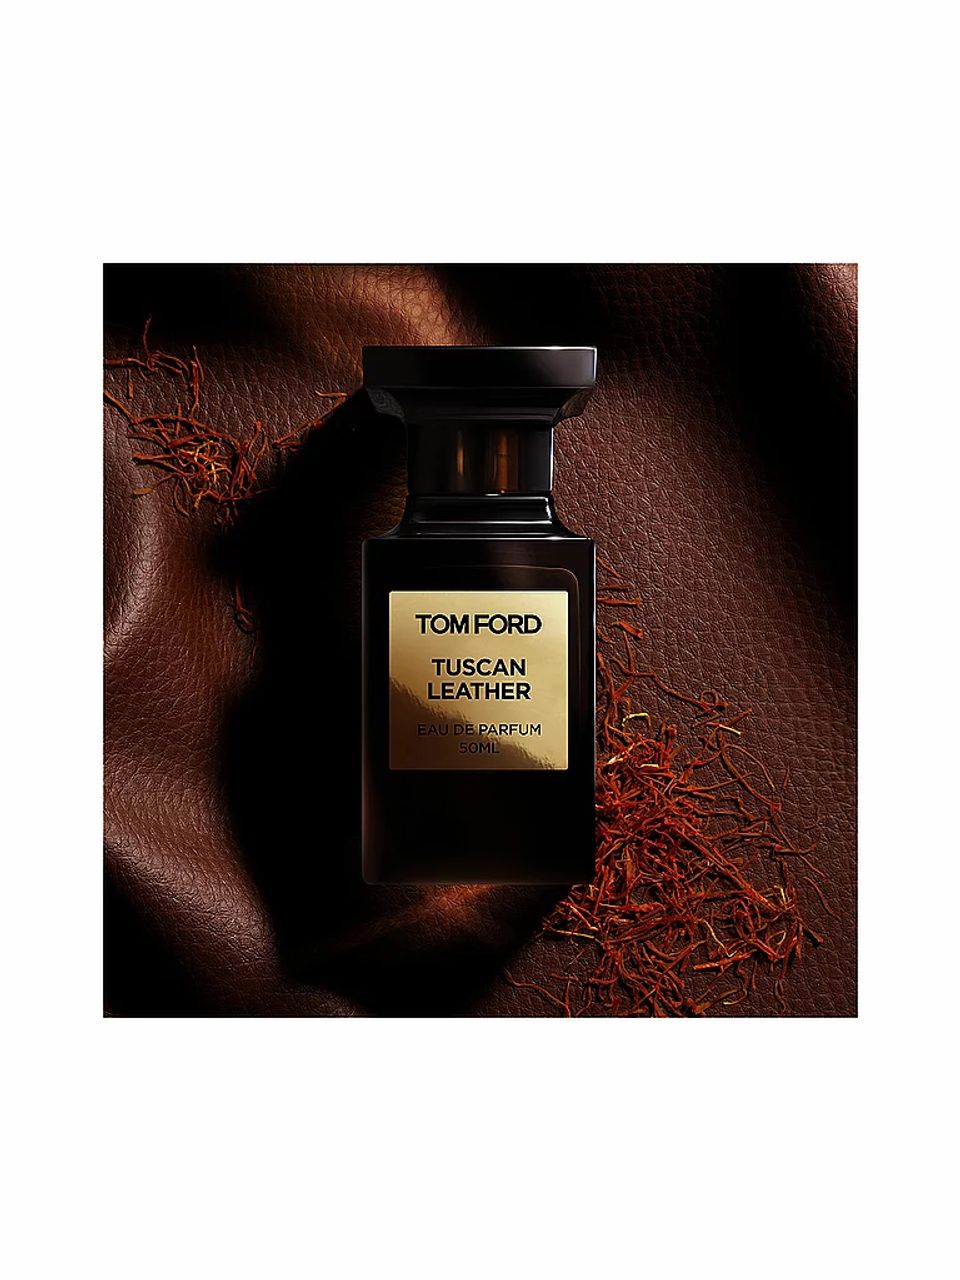 TOM FORD Private Blend Tuscan Leather Eau de Parfum 50ml